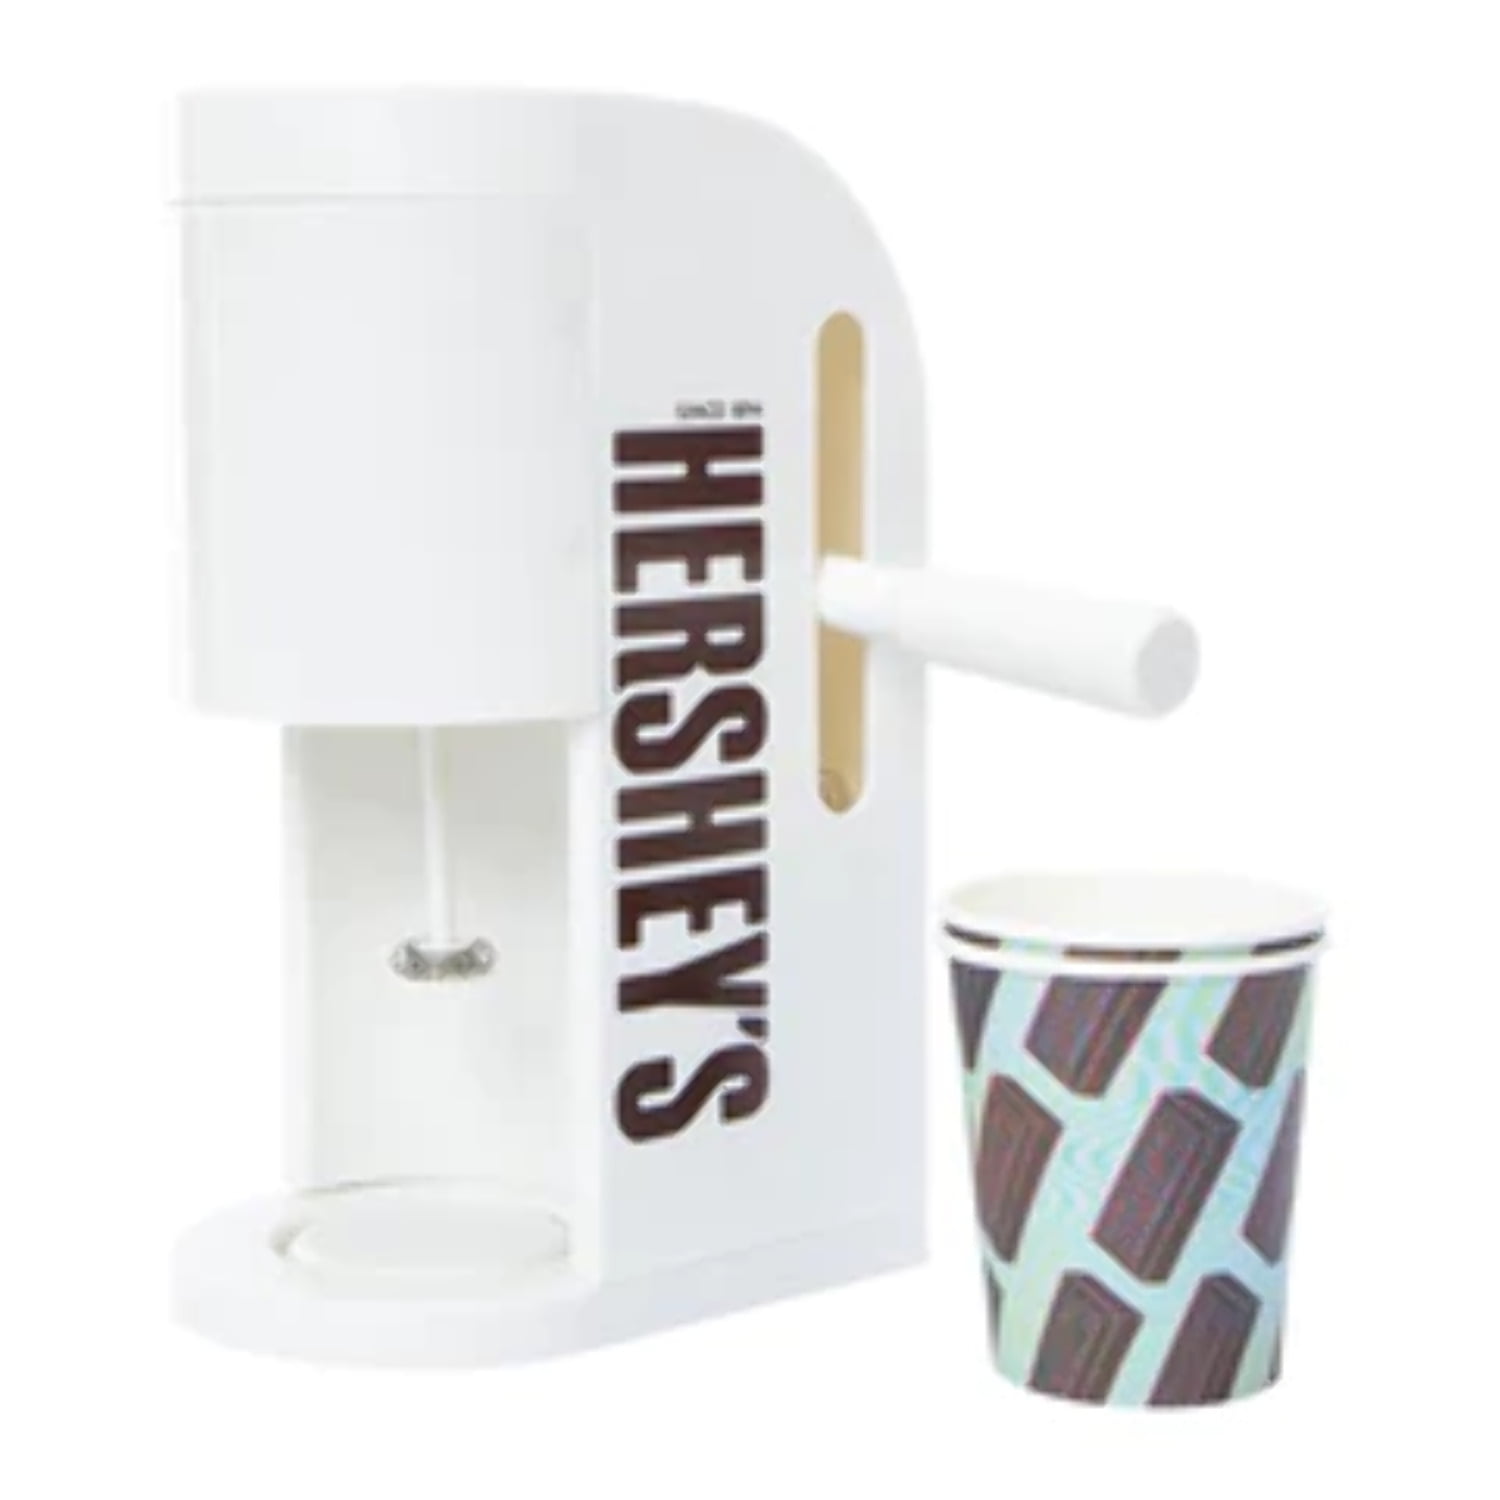 chocolate milk mixer machine｜TikTok Search